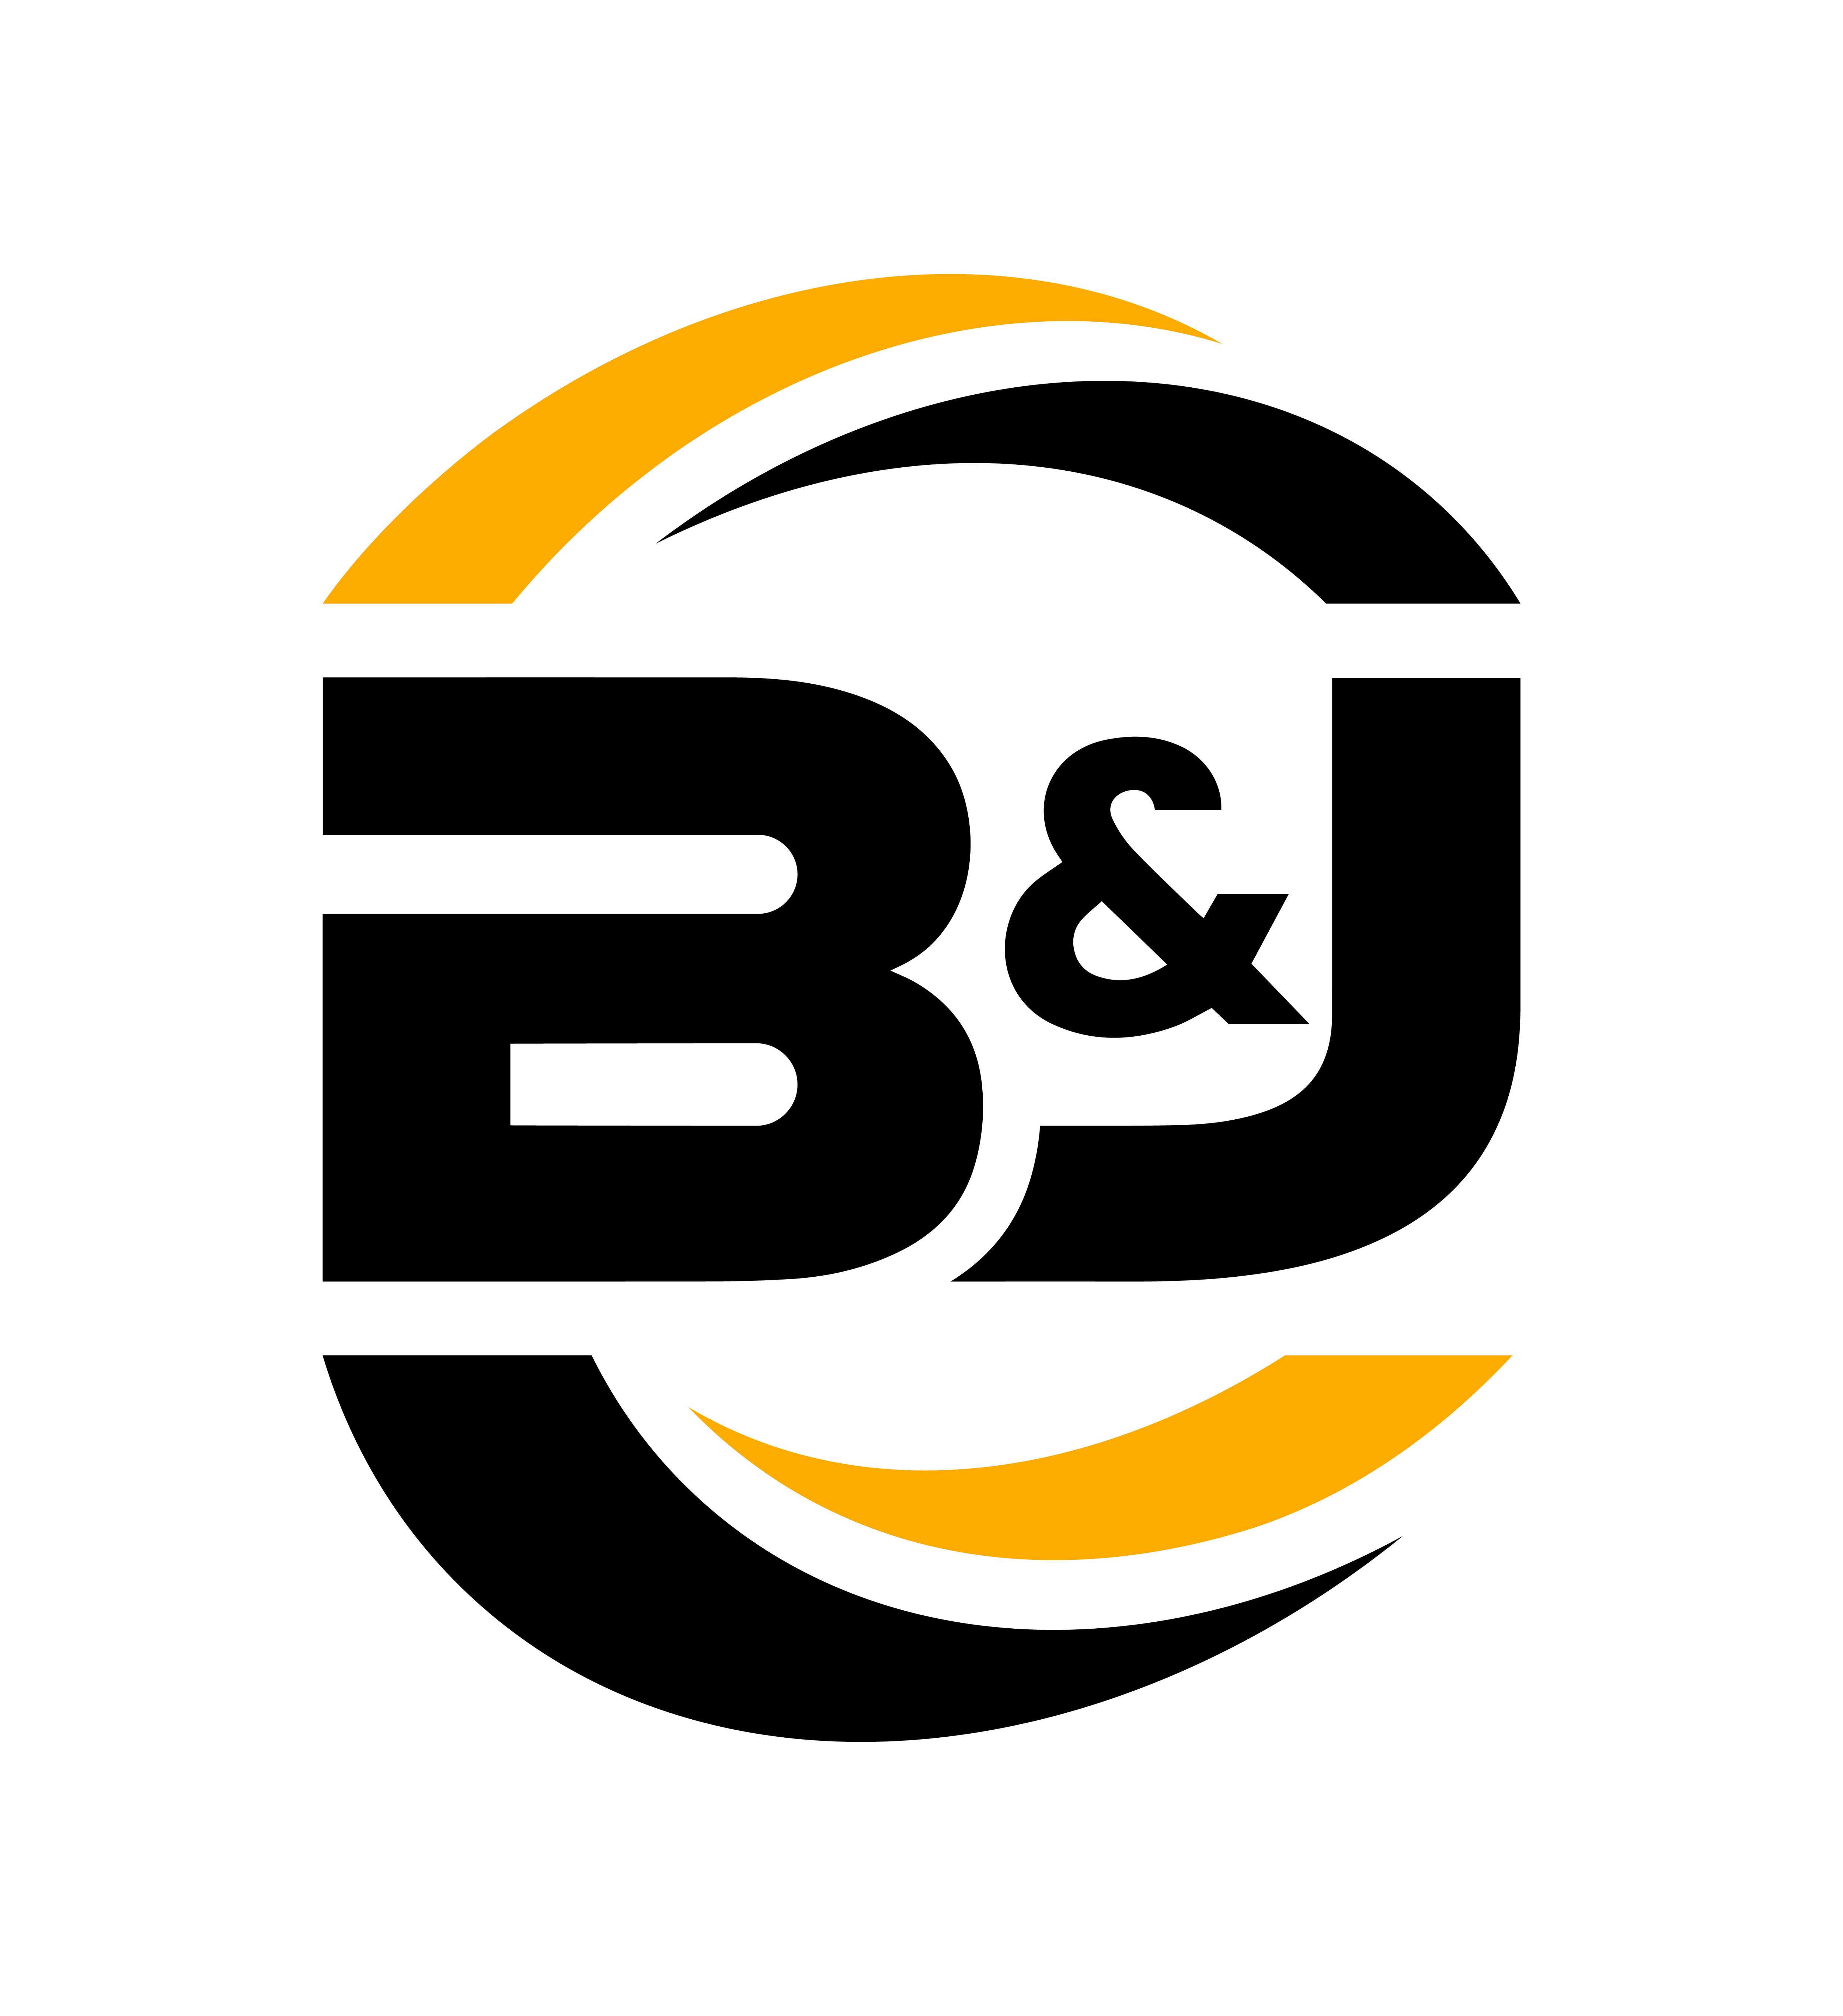 B&J Contracting